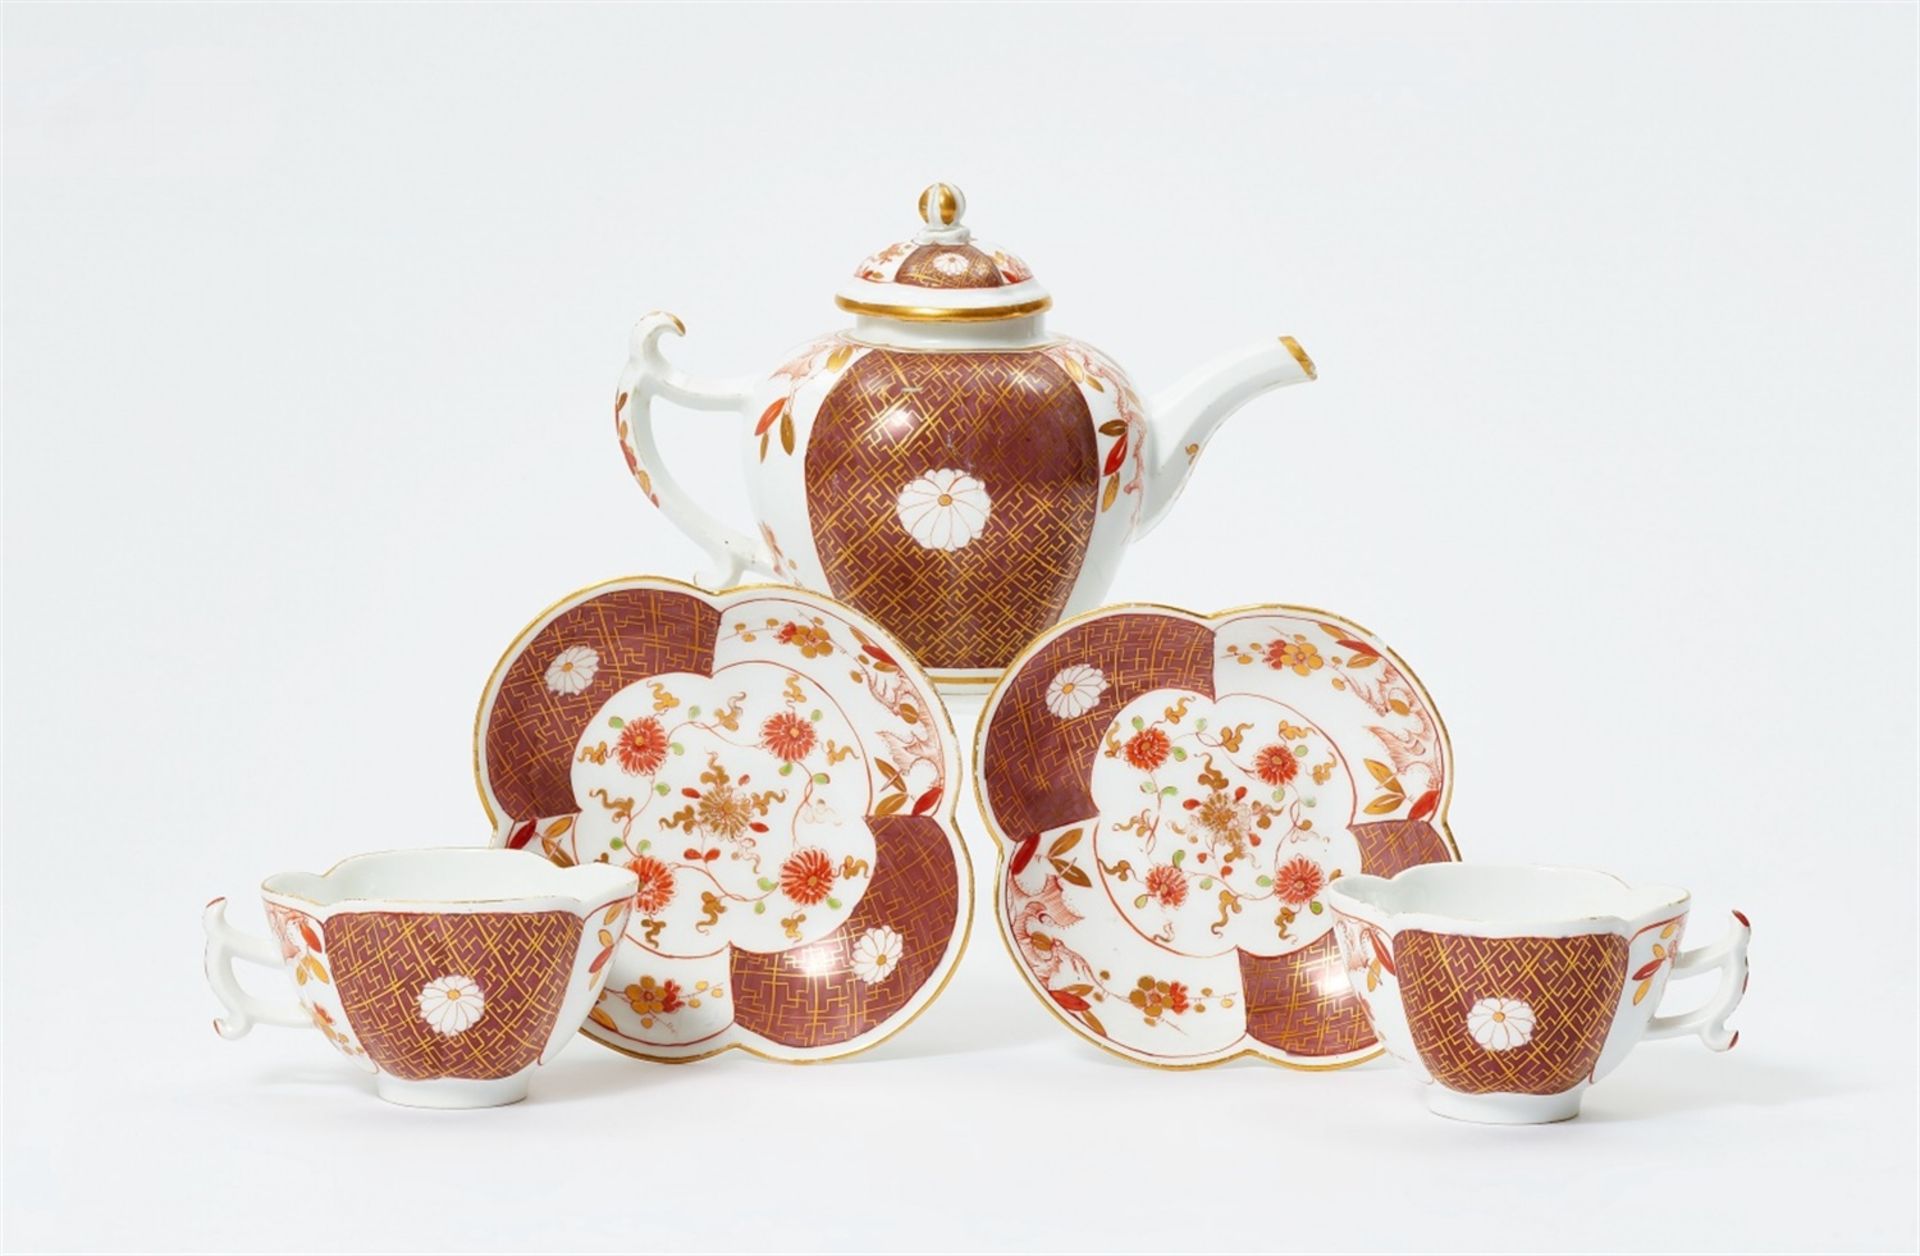 Fünf Teile aus einem Teeservice im Imari-Stil